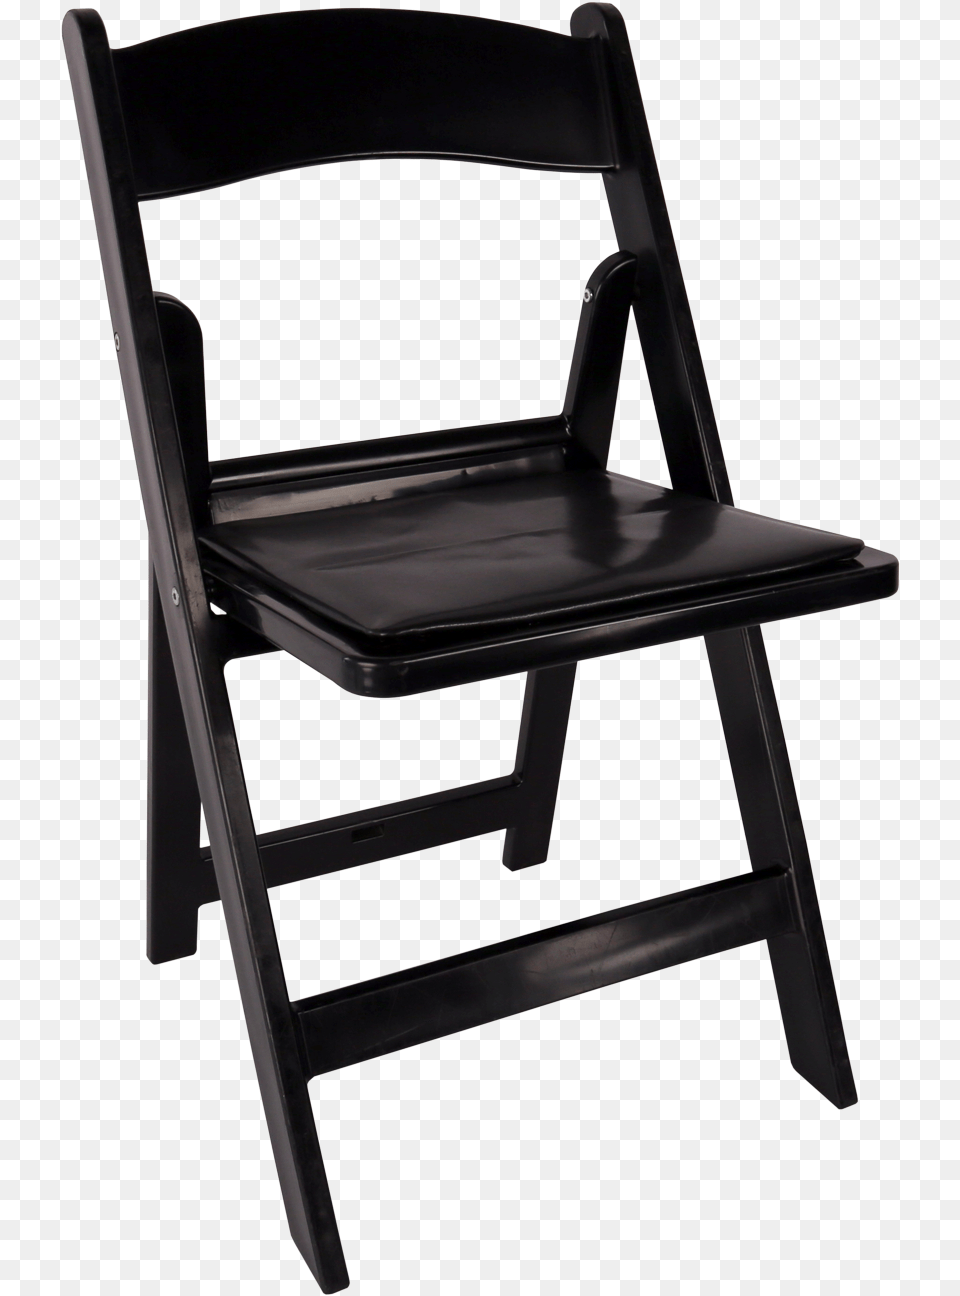 Black Padded Folding Chairs Fresh Chair Black Resin Black Resin Garden Chair, Furniture Png